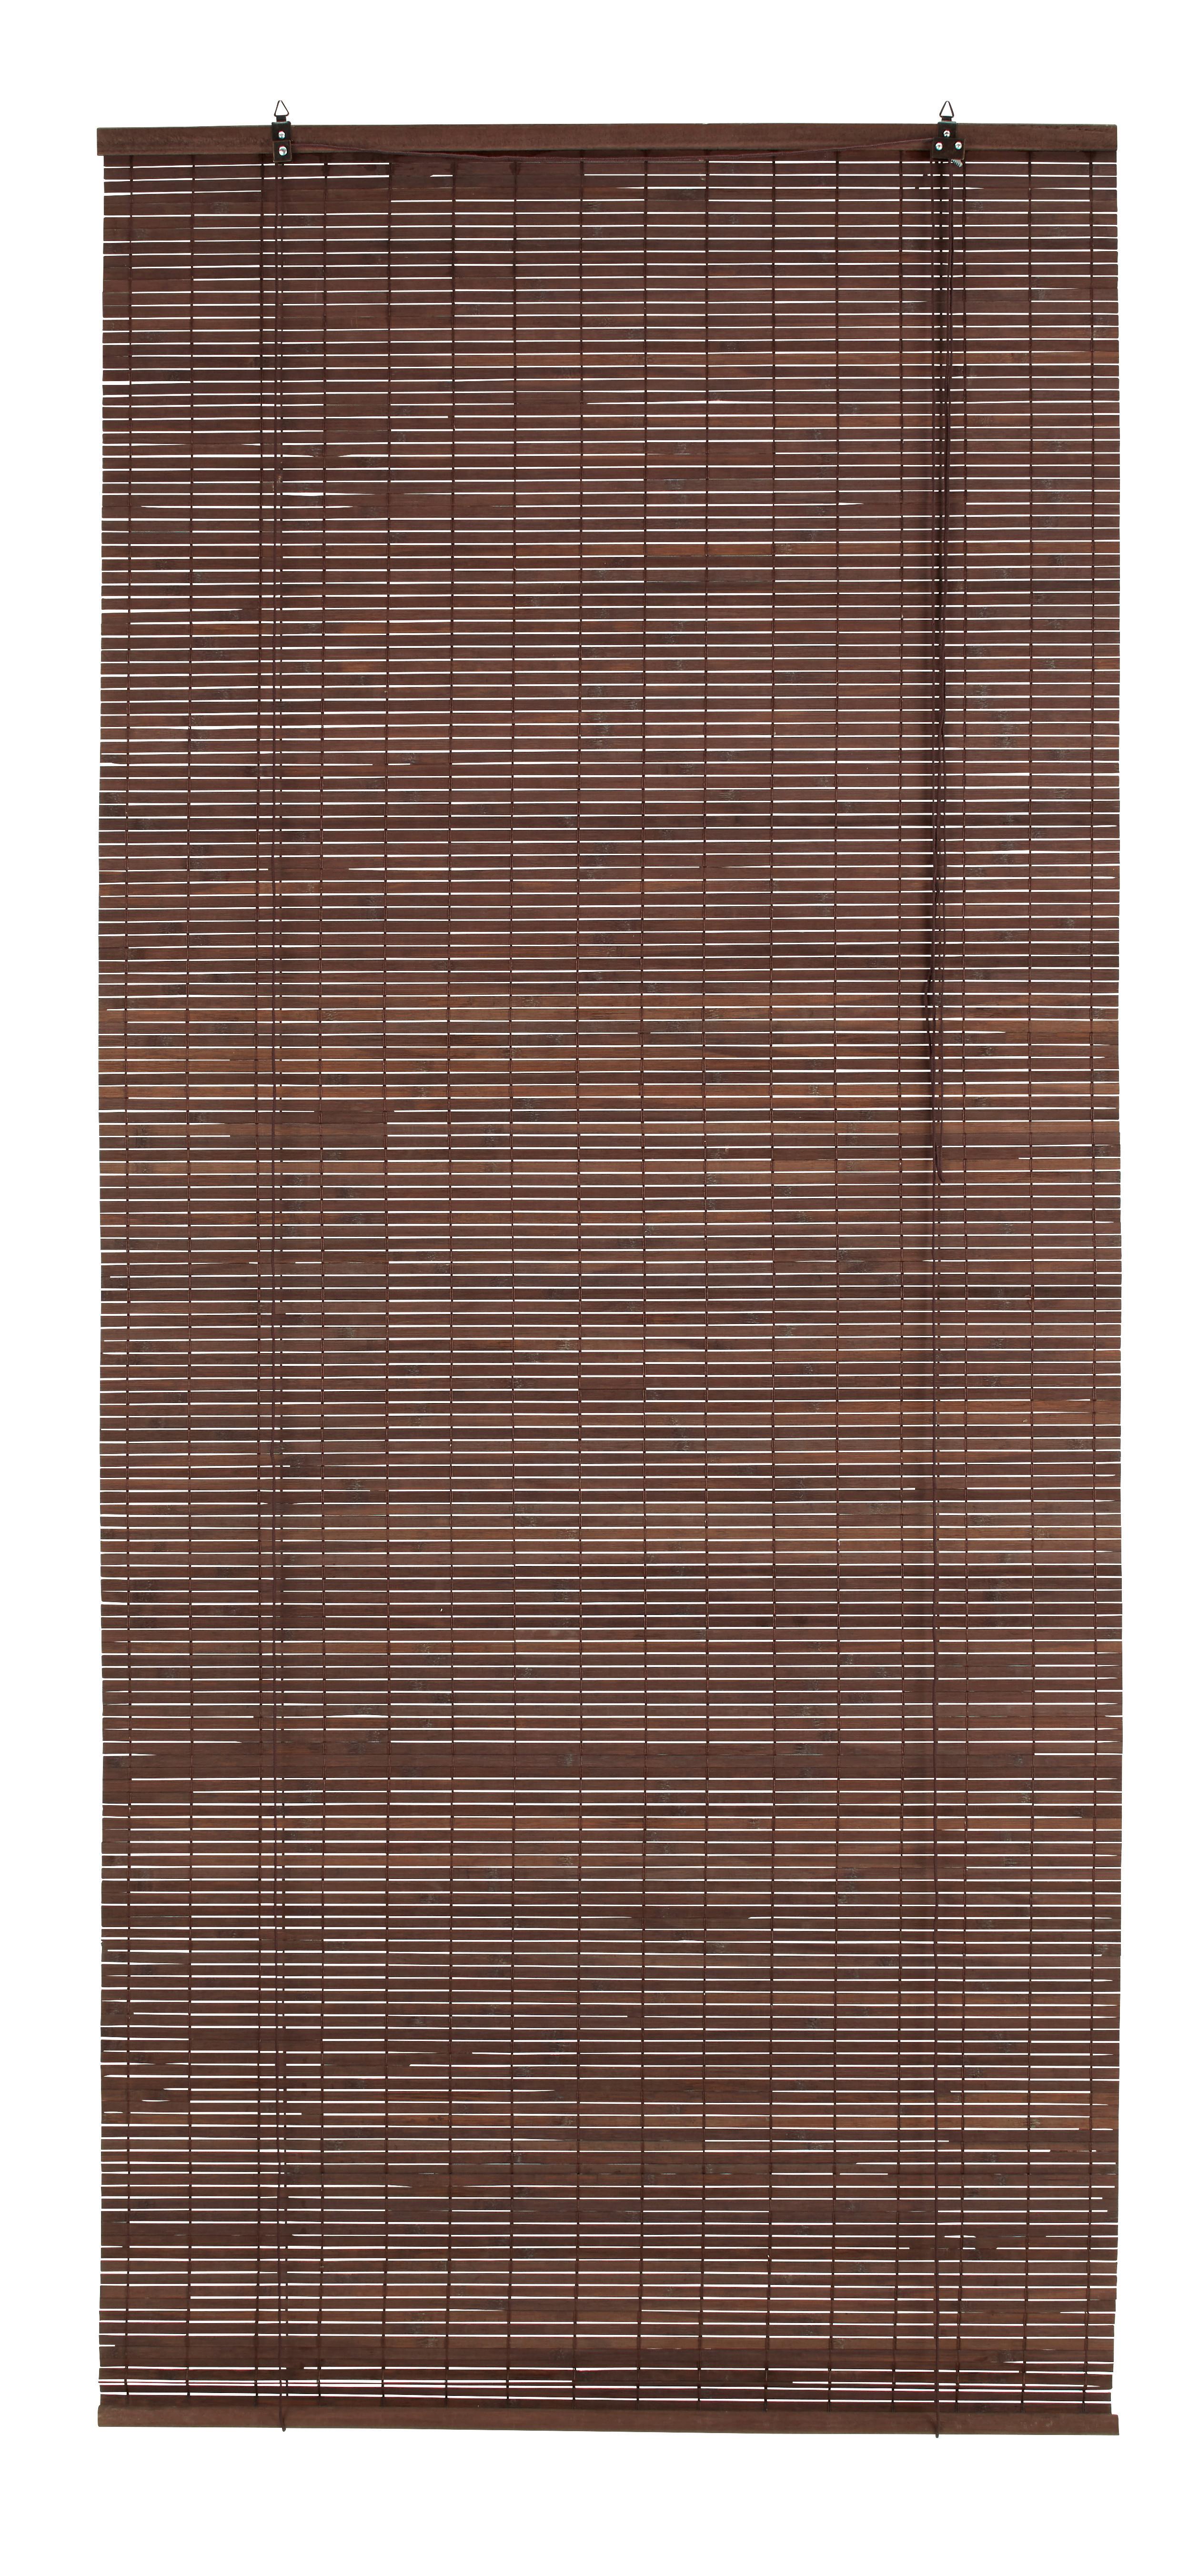 Rollo Woody aus Holz ca. 80x180cm - Dunkelbraun, Holz (80/180cm) - Modern Living